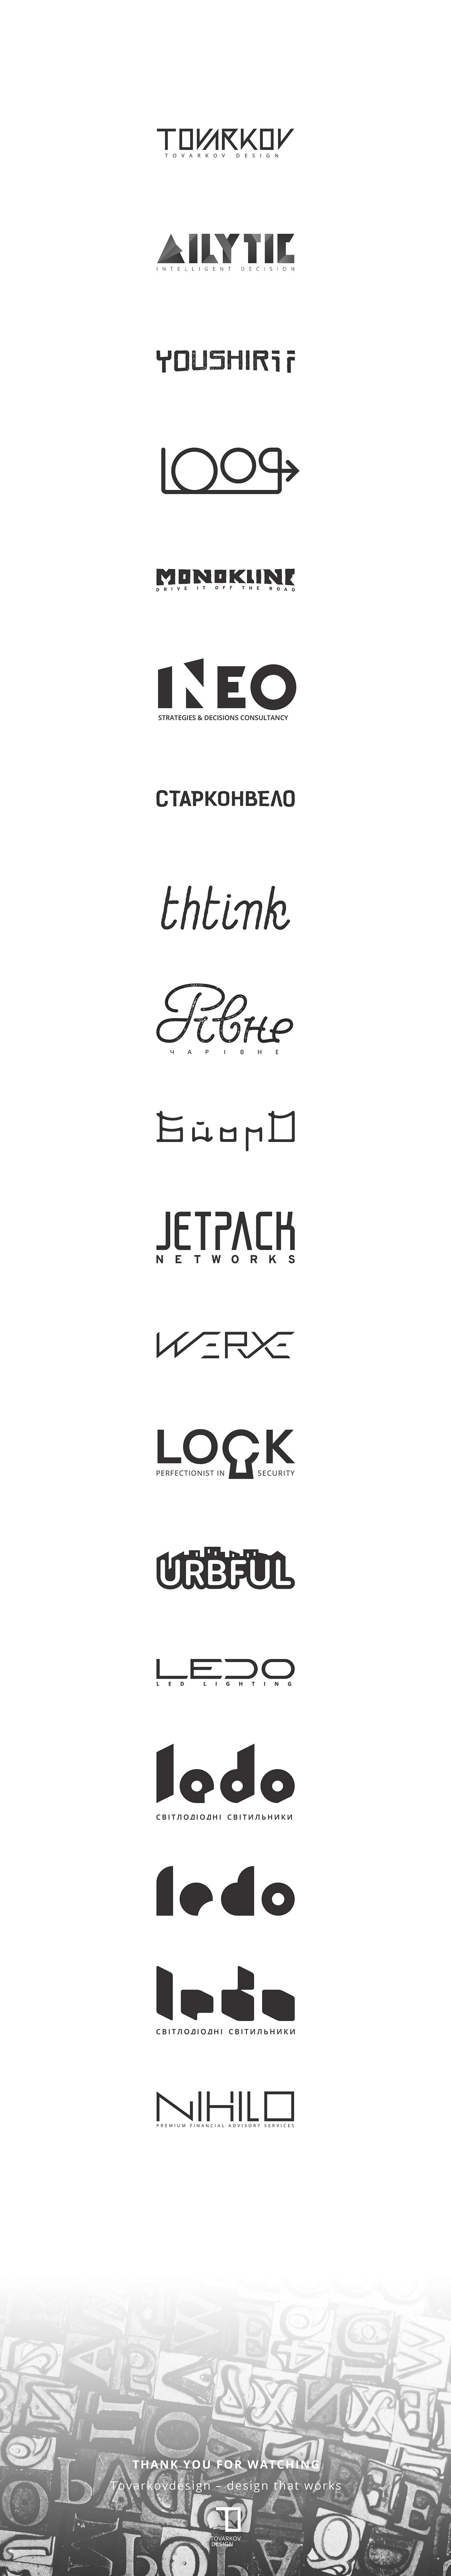 logo Logotype wordmark text only logo